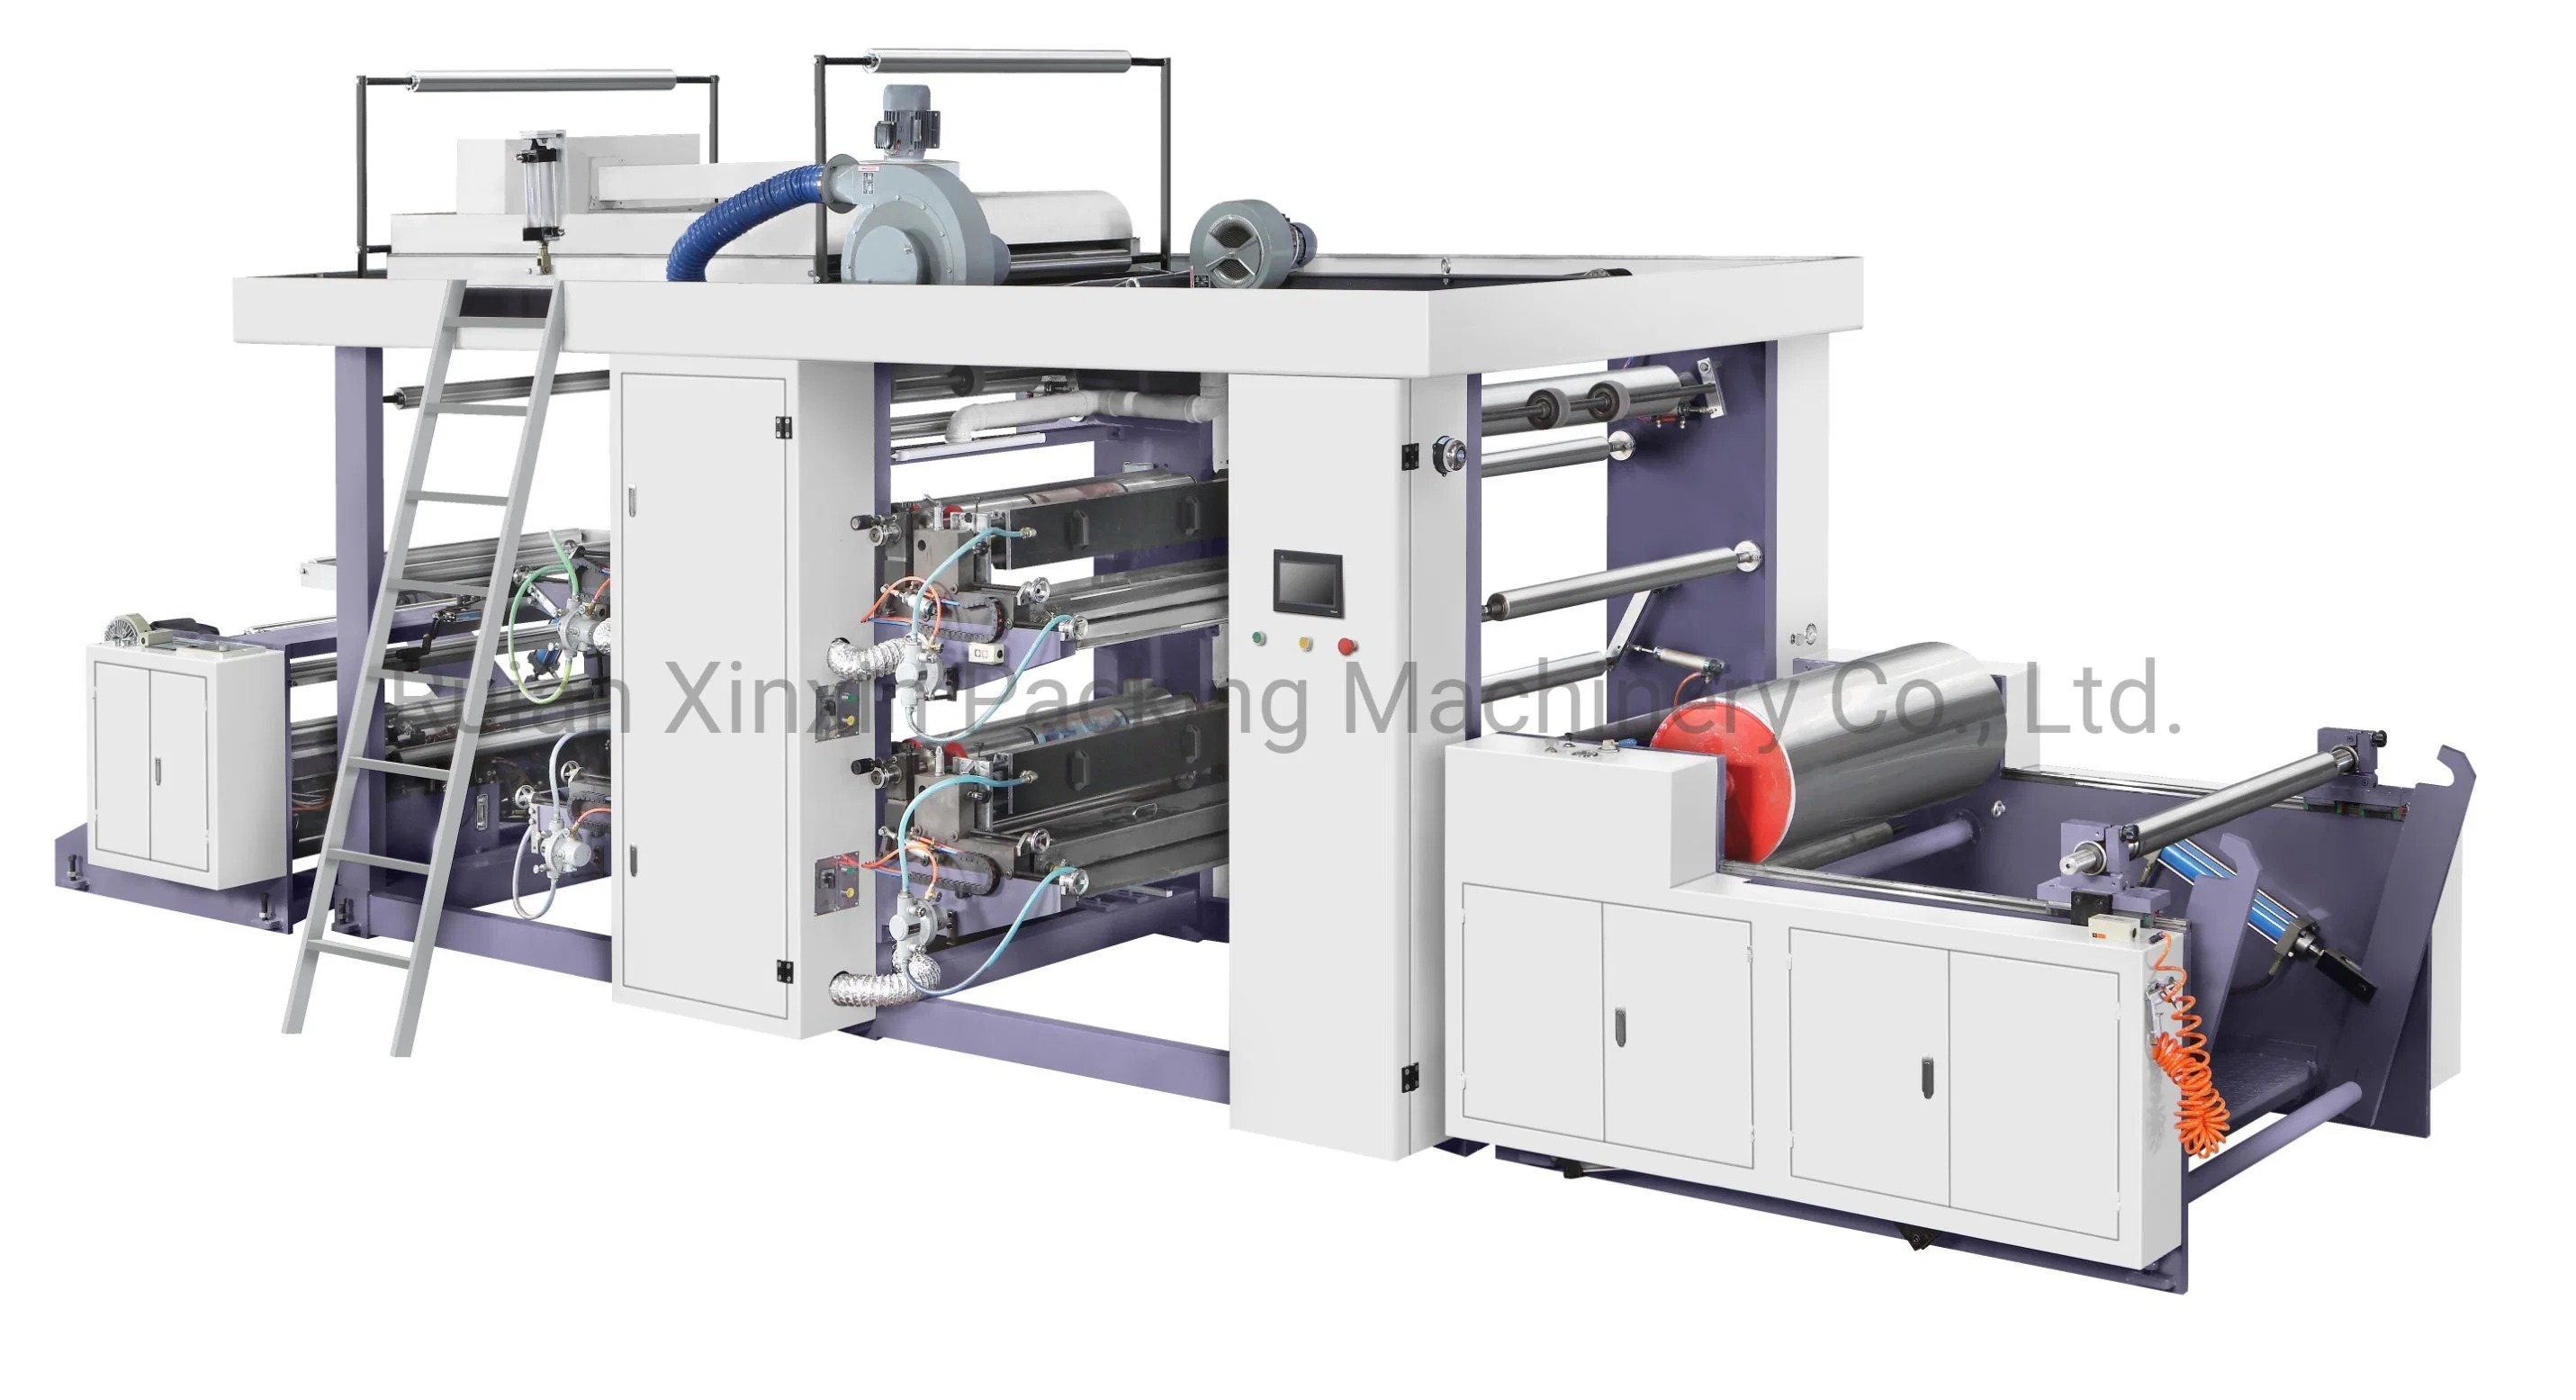 4color Máquina de impresión flexográfica/flexo de alta velocidad automática para bolsas de papel/no tejidas/PP/película de plástico/bolsa de compras de papel con certificación CE